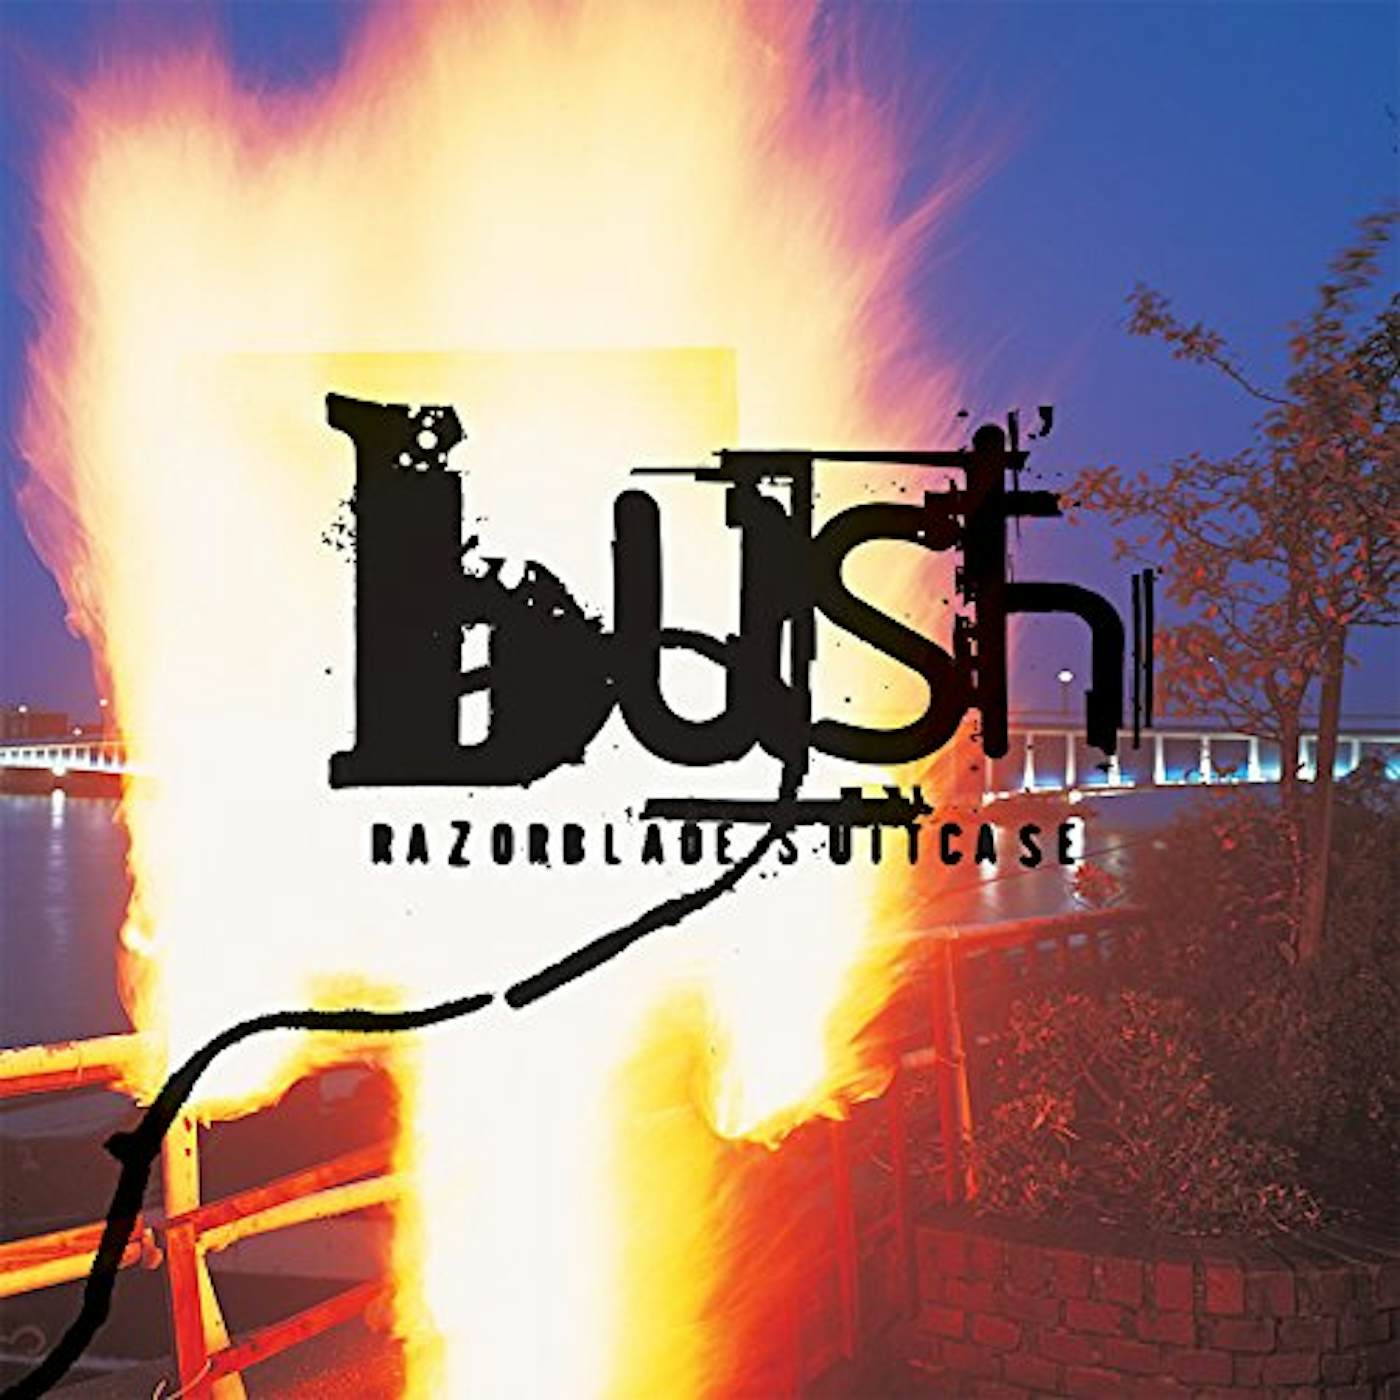 Bush RAZORBLADE SUITCASE CD